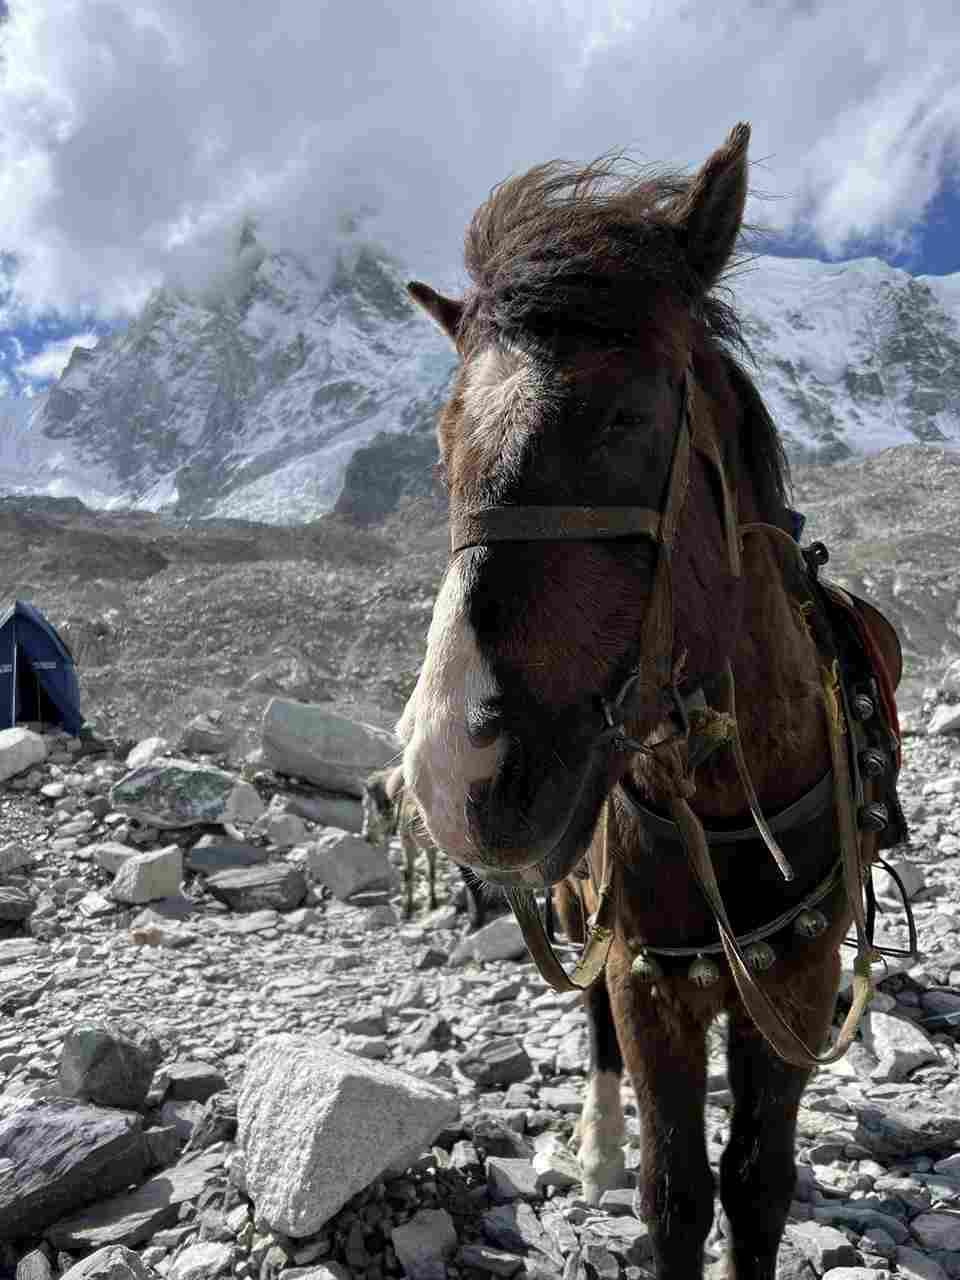 Everest Base Camp Trek with Bikat Adventures